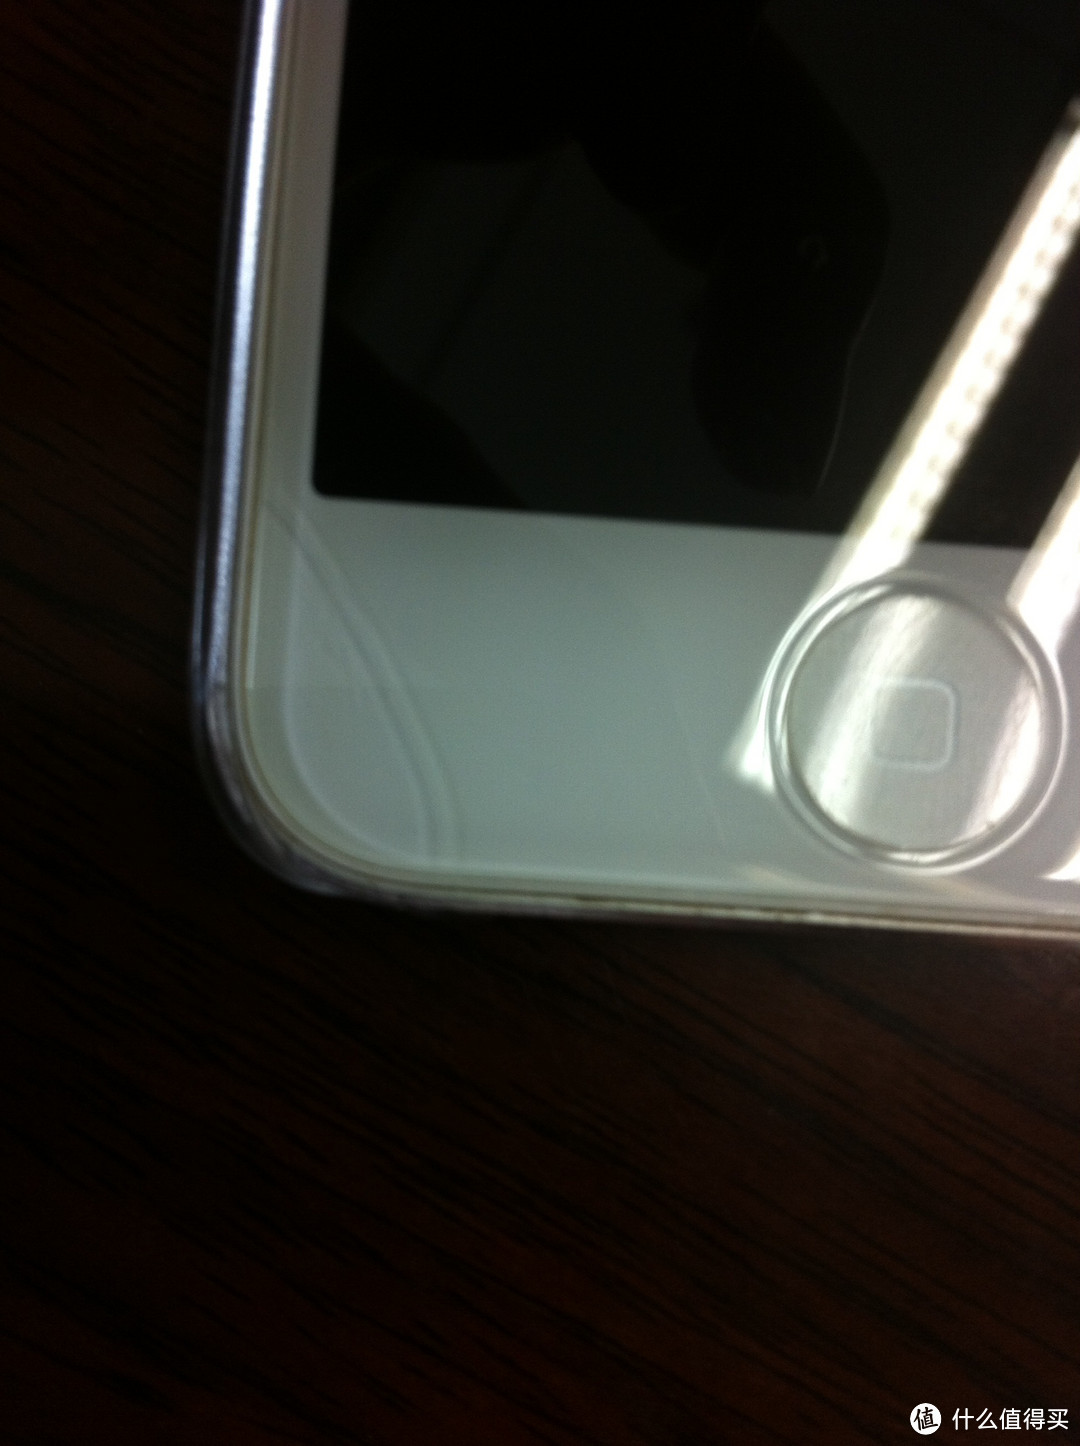 LOCA 路可 iPhone 5/5C/5S 钢化玻璃膜众测报告